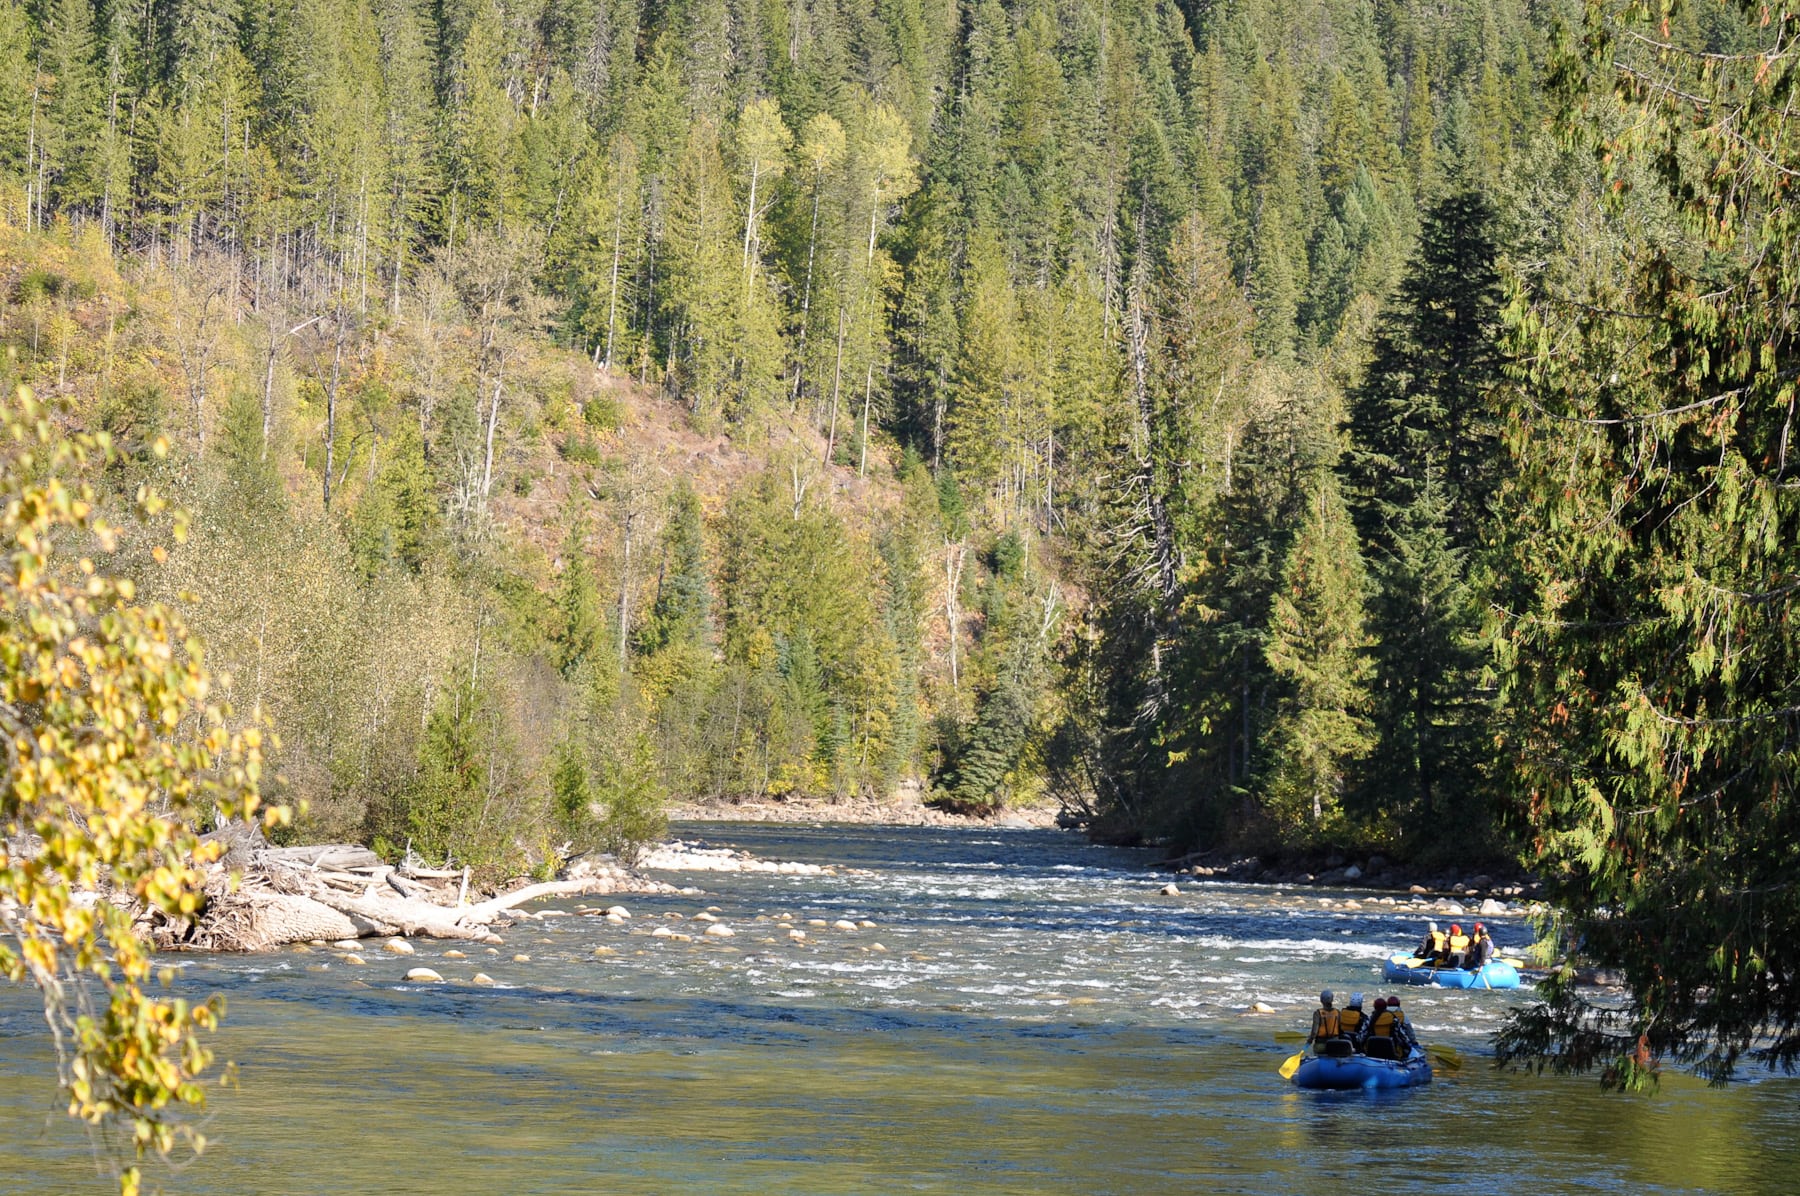 Rafting the river at Wild Bear Lodge